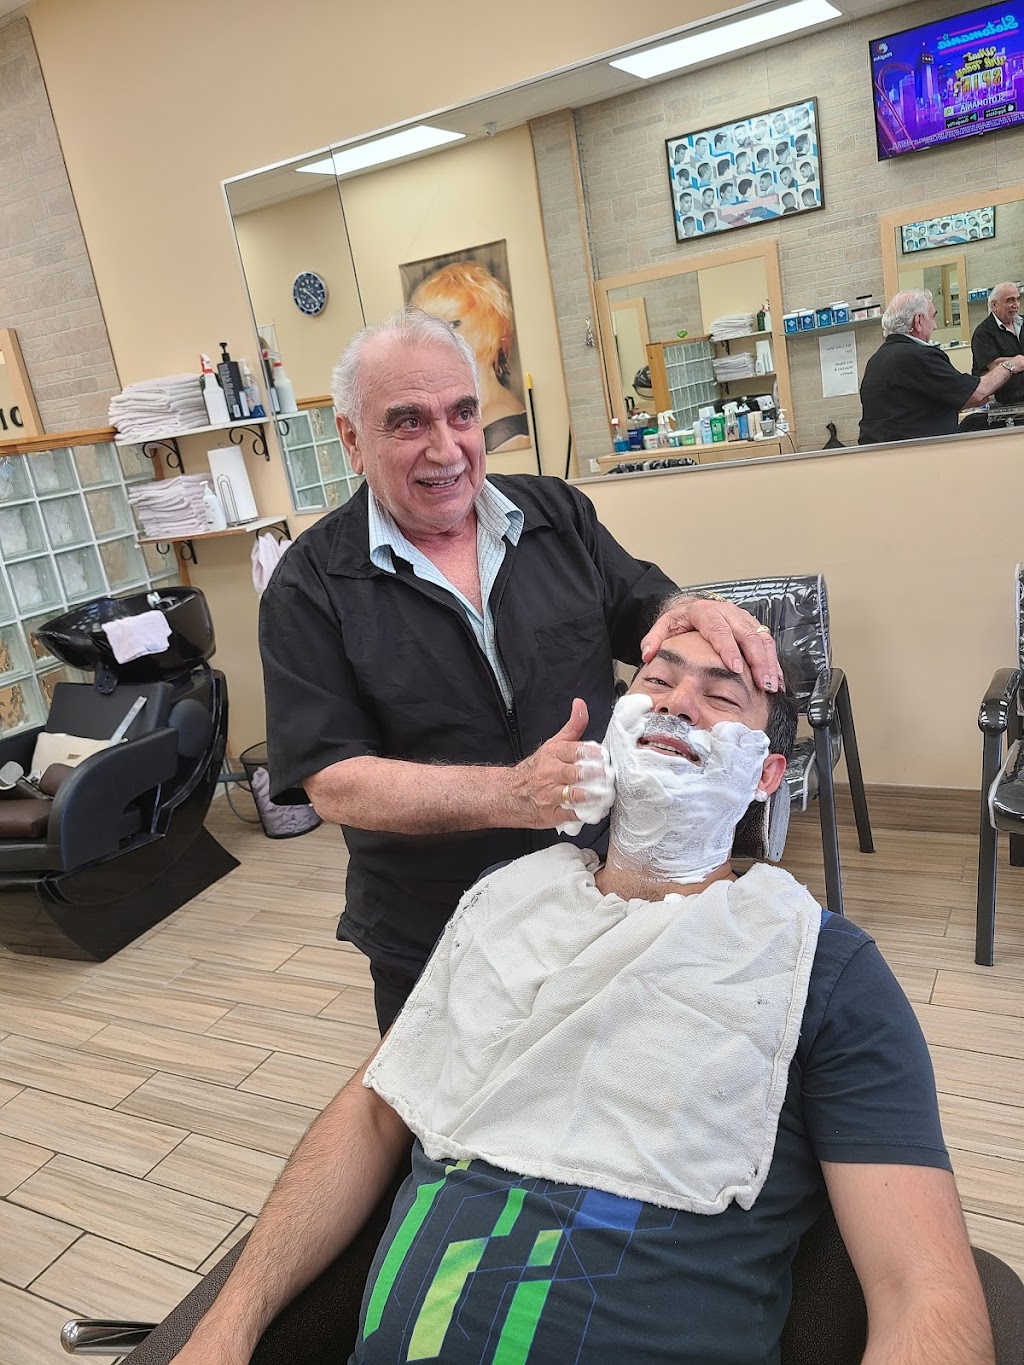 Davis Barber Shop salon | 2050 Hillside Ave., North New Hyde Park, NY 11040, USA | Phone: (347) 401-1285